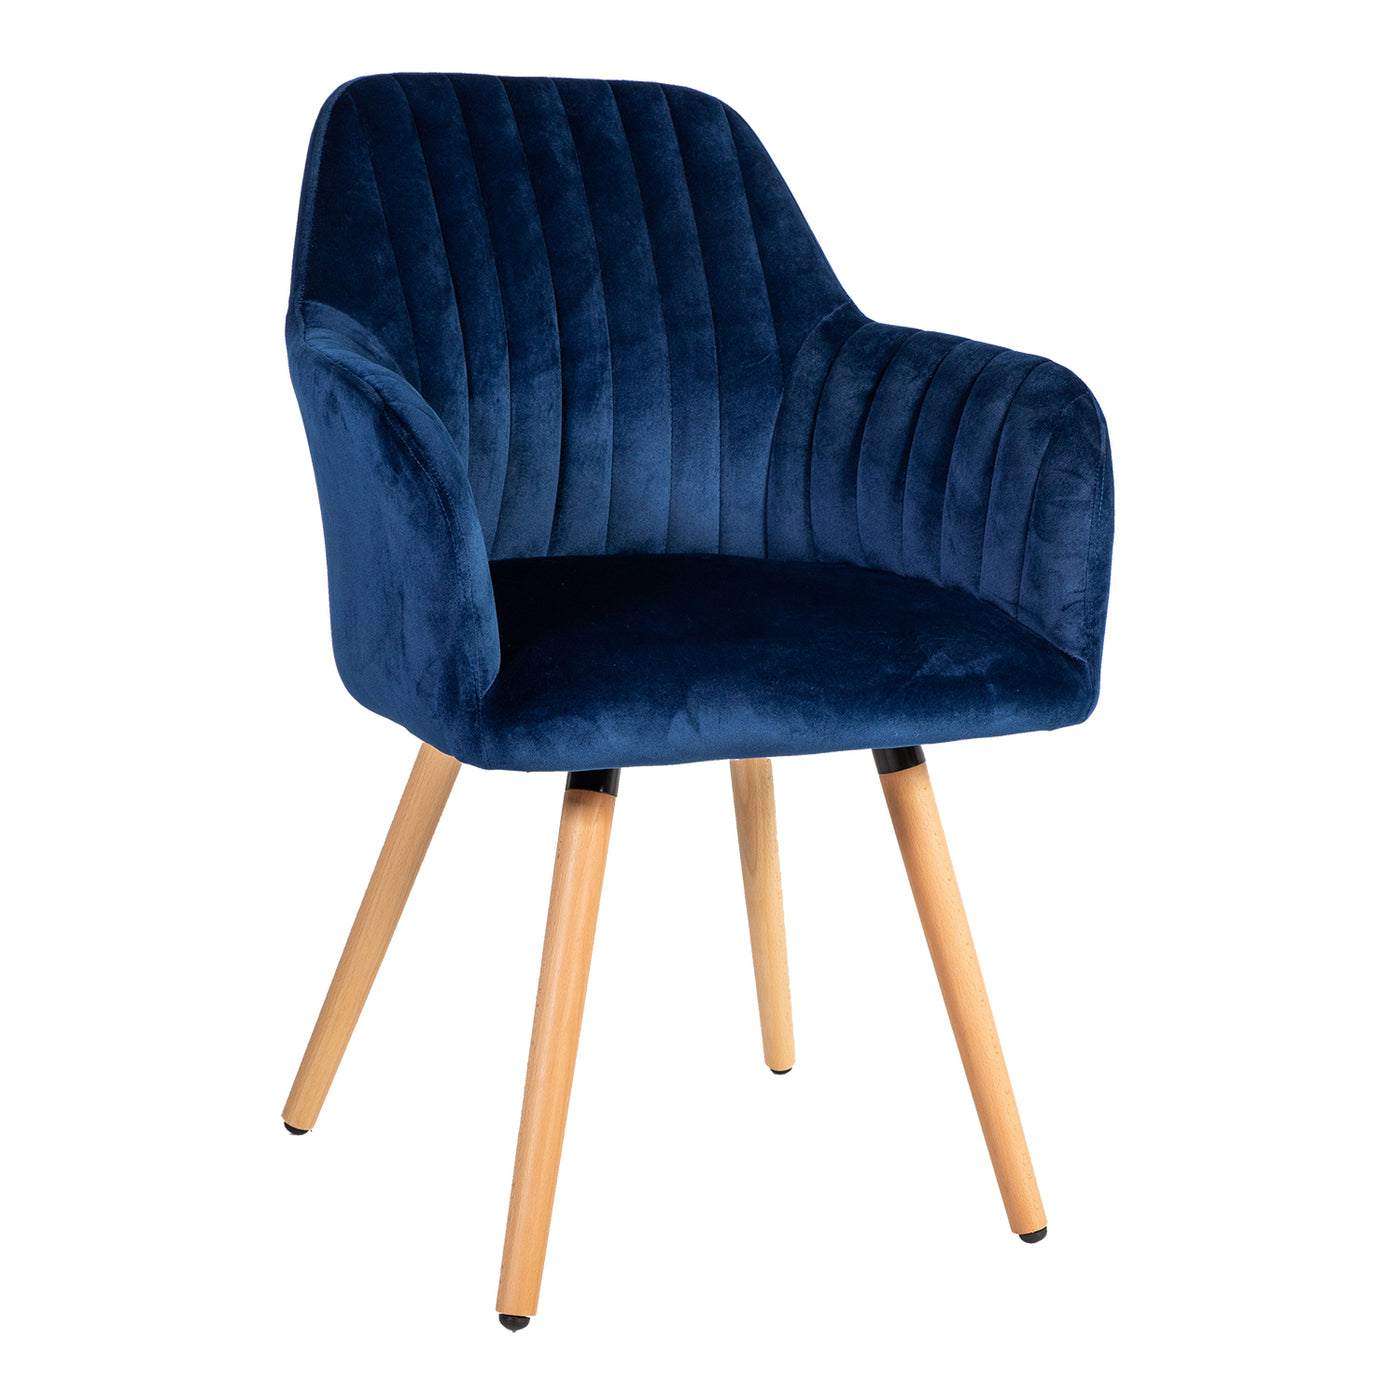 Ariel tuoli, sininen - Mööpeli.com